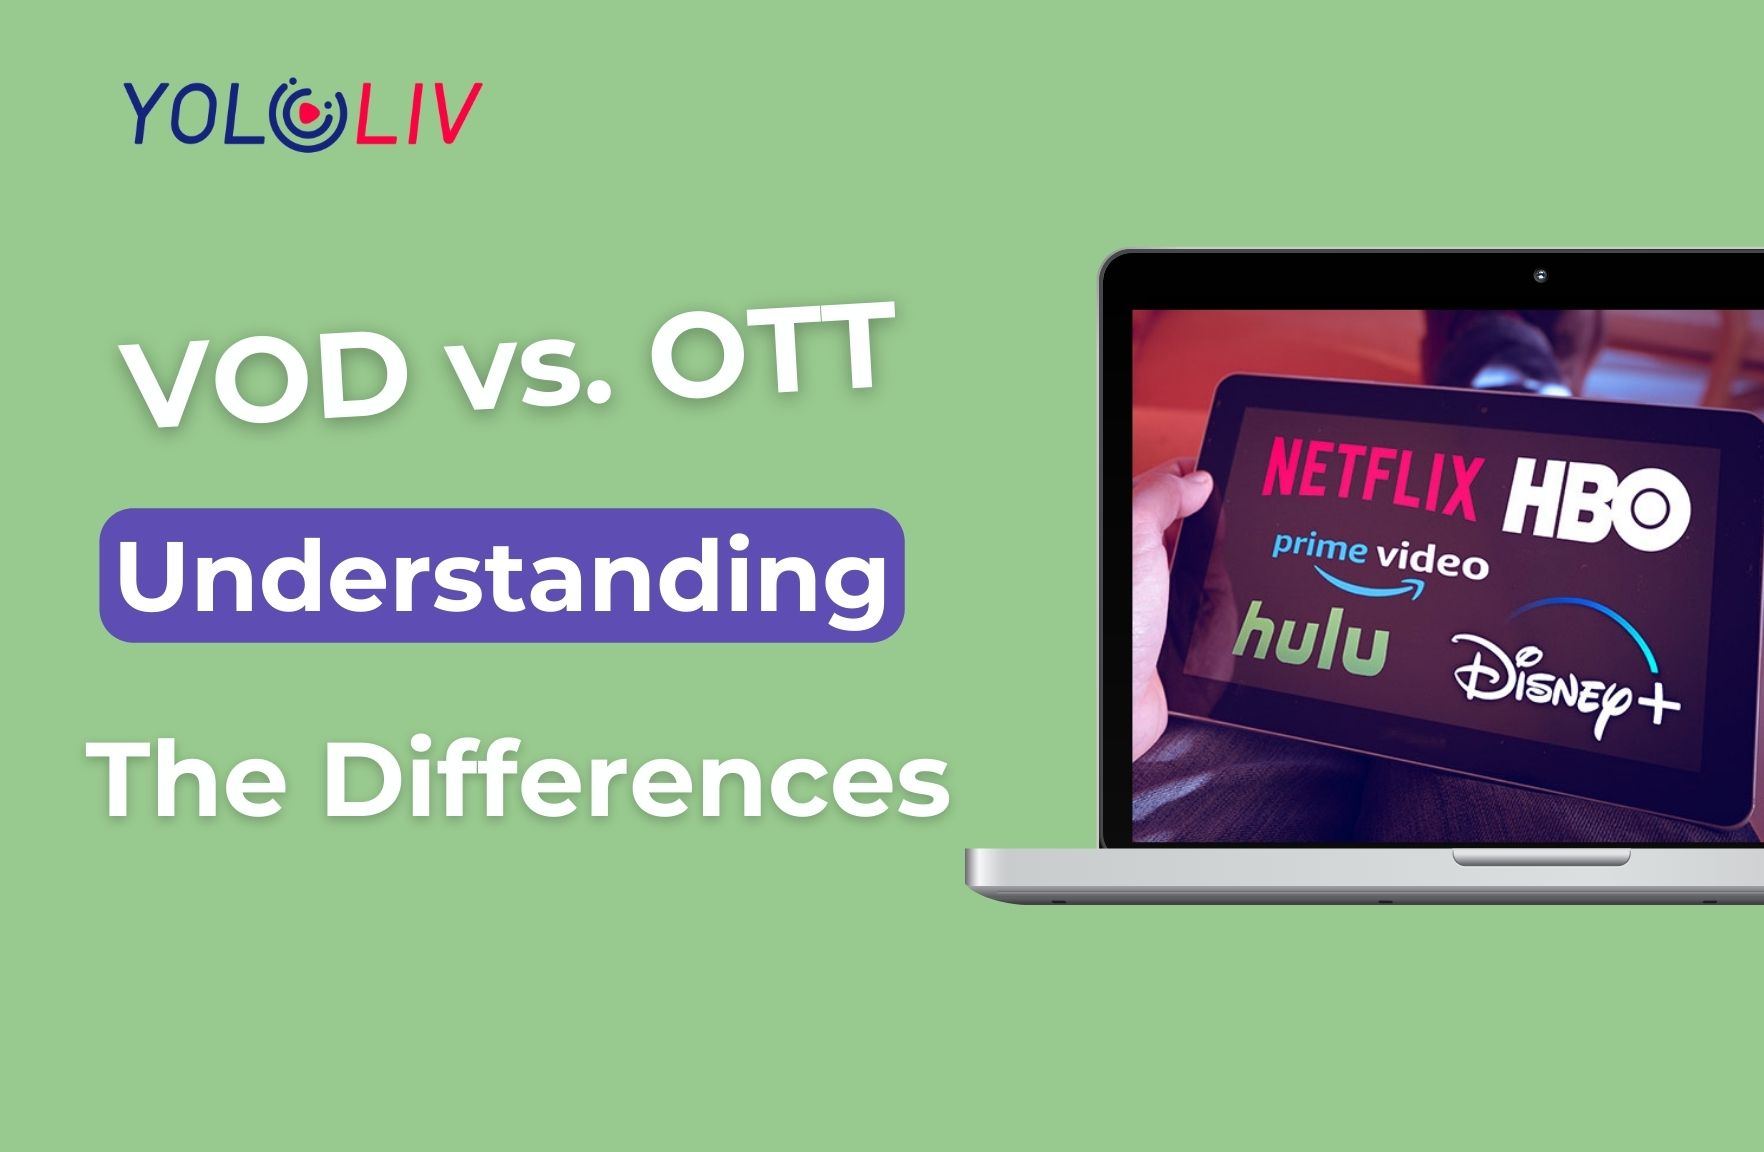 VOD vs OTT Understanding the Difference